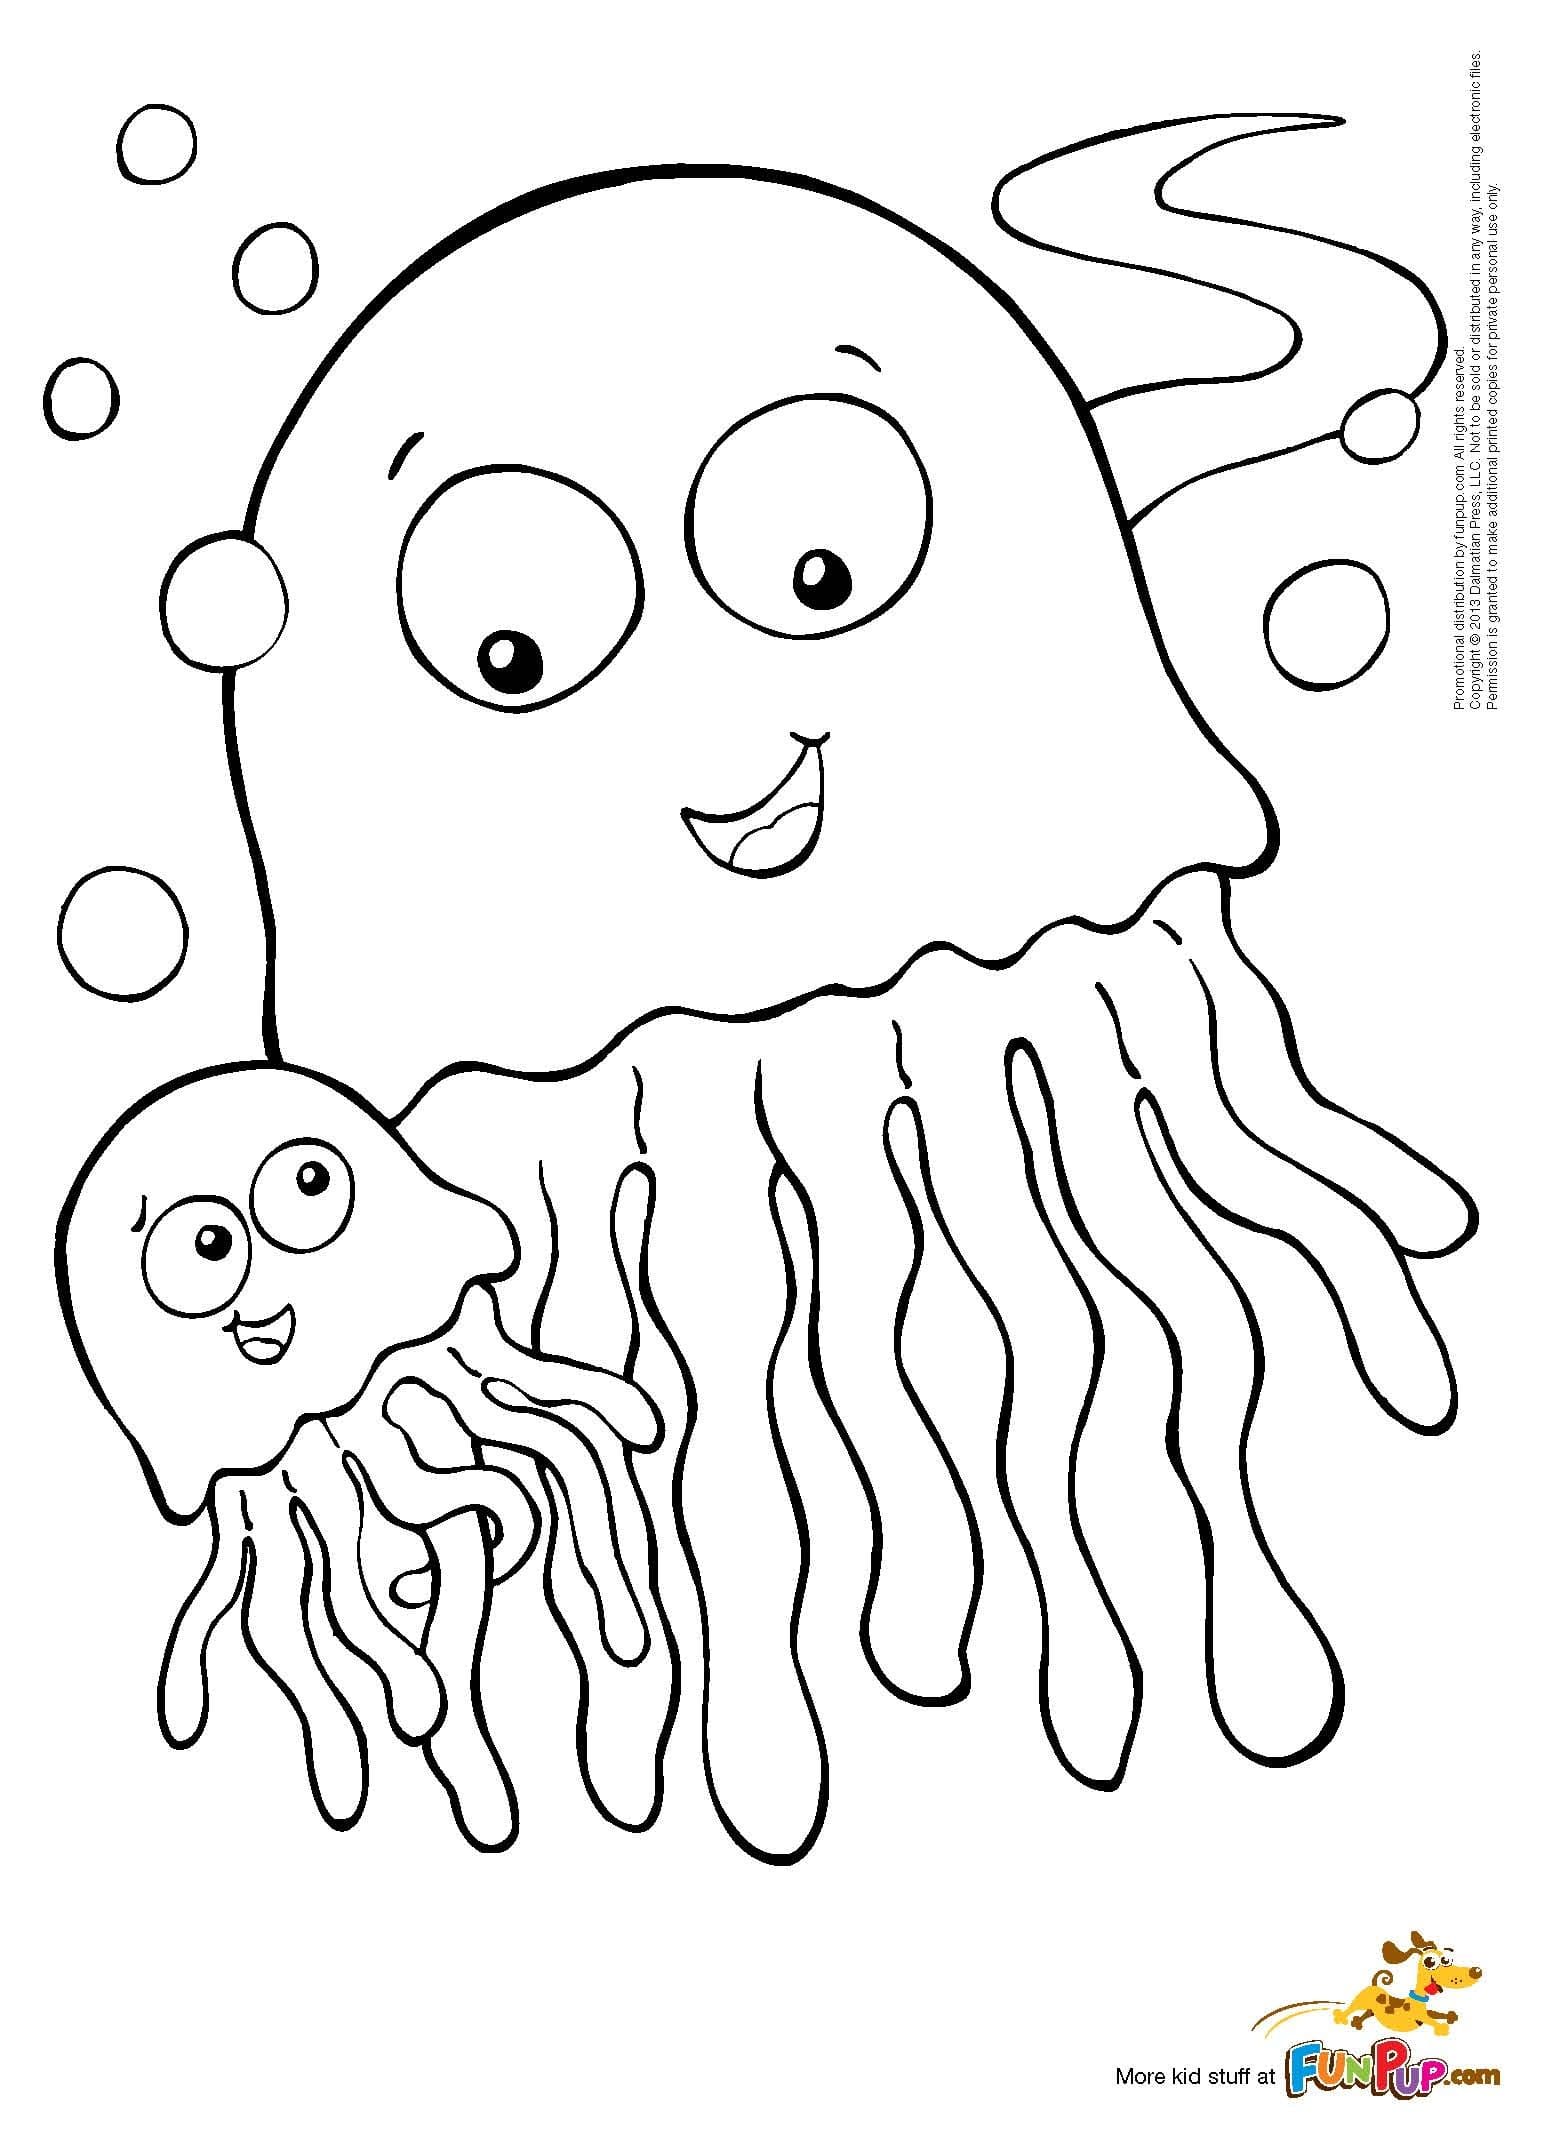 Jellyfish Image Kids